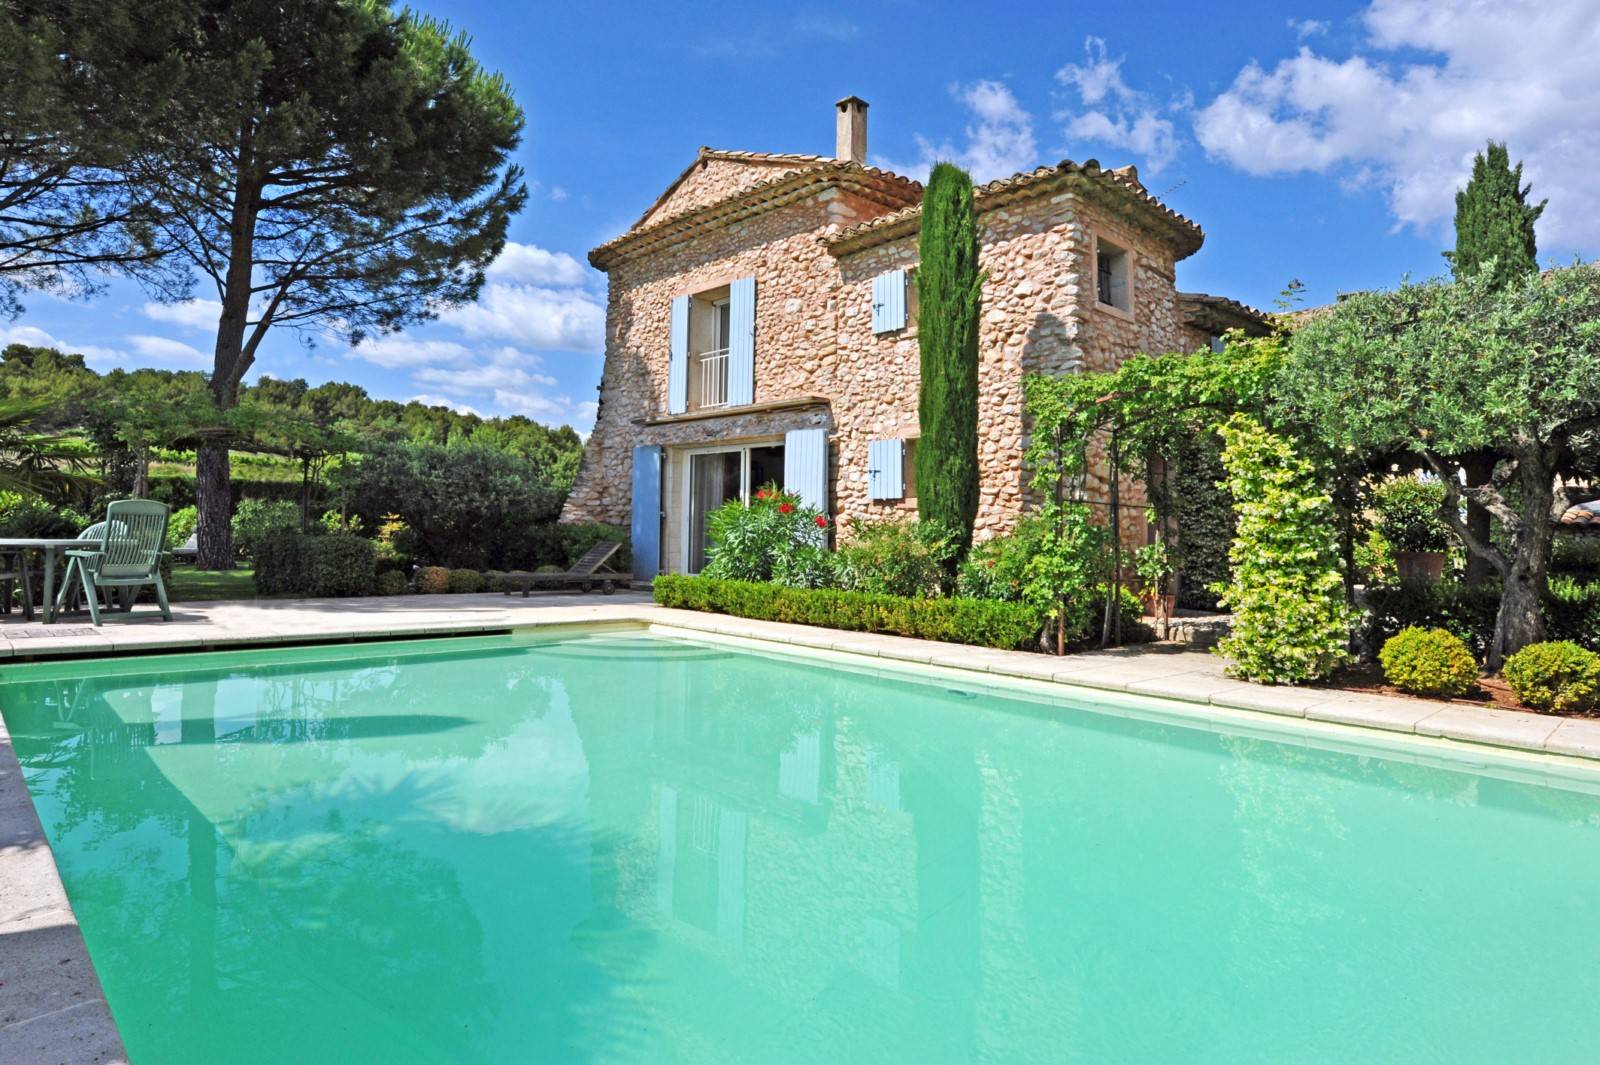 Vente Luberon, superbe maison de hameau avec piscine